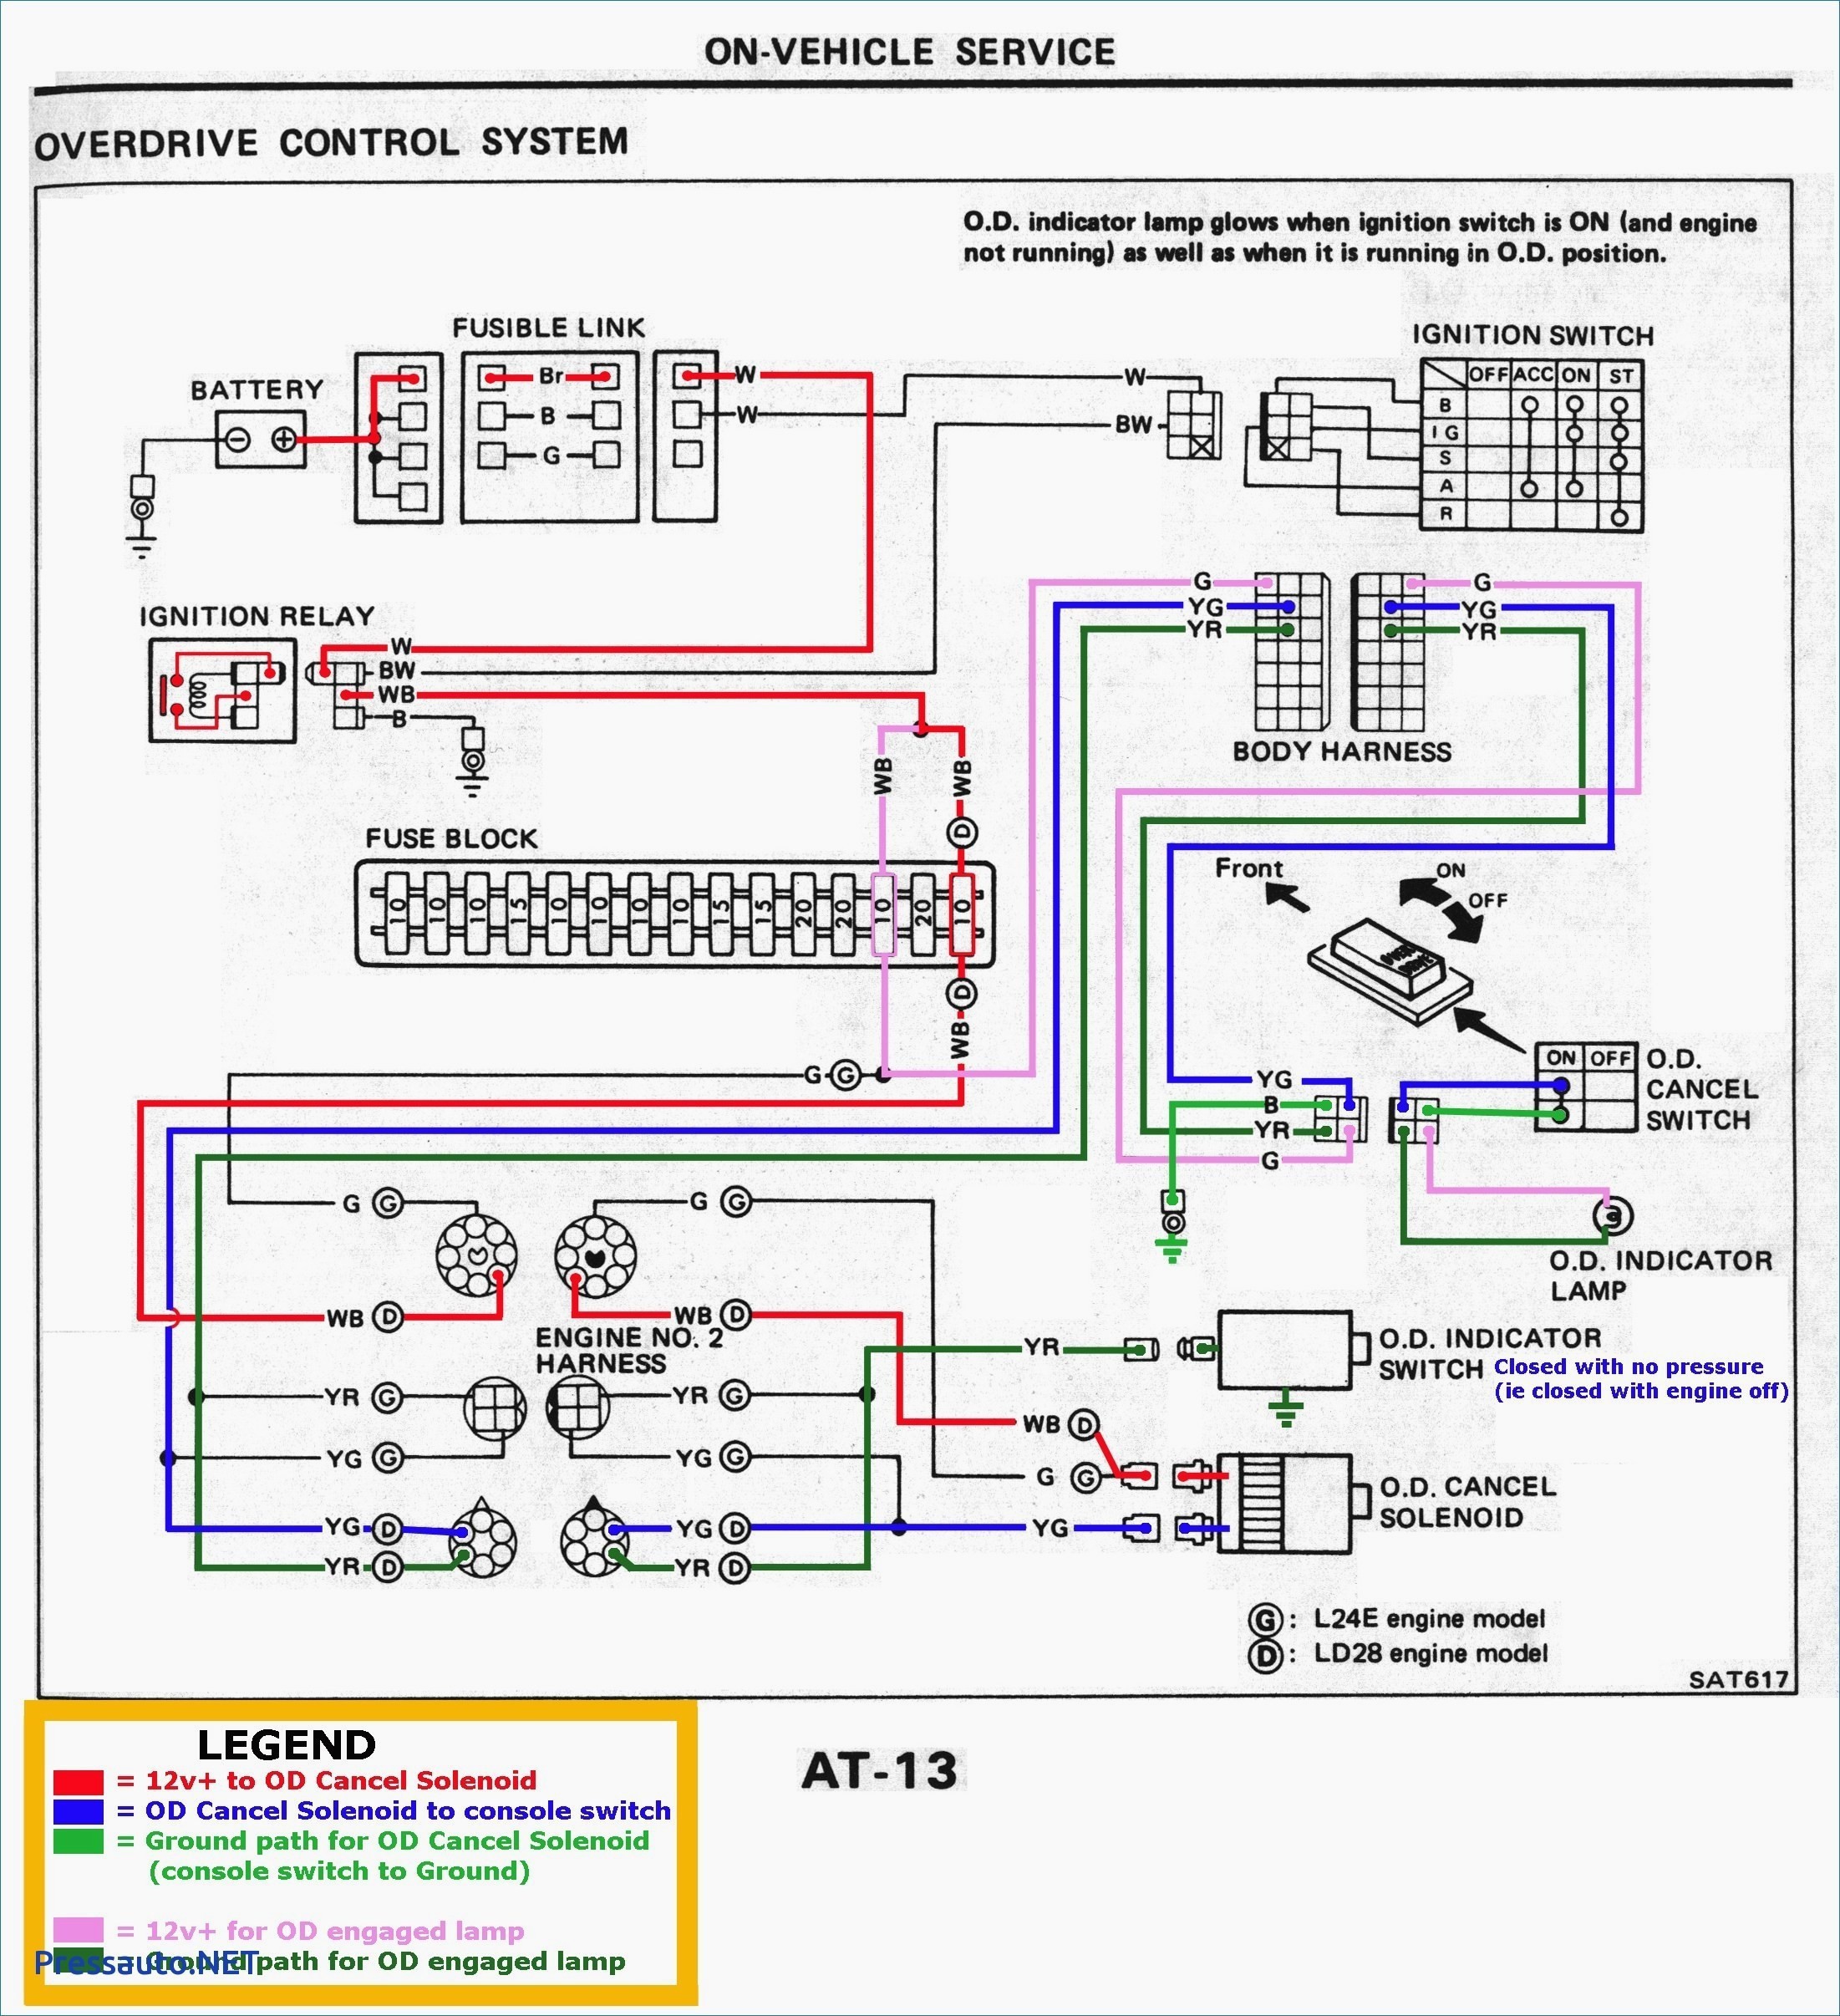 Car Electric Fan Wiring Diagram 04 Audi A4 Wiring Diagram Wiring Diagram New Of Car Electric Fan Wiring Diagram